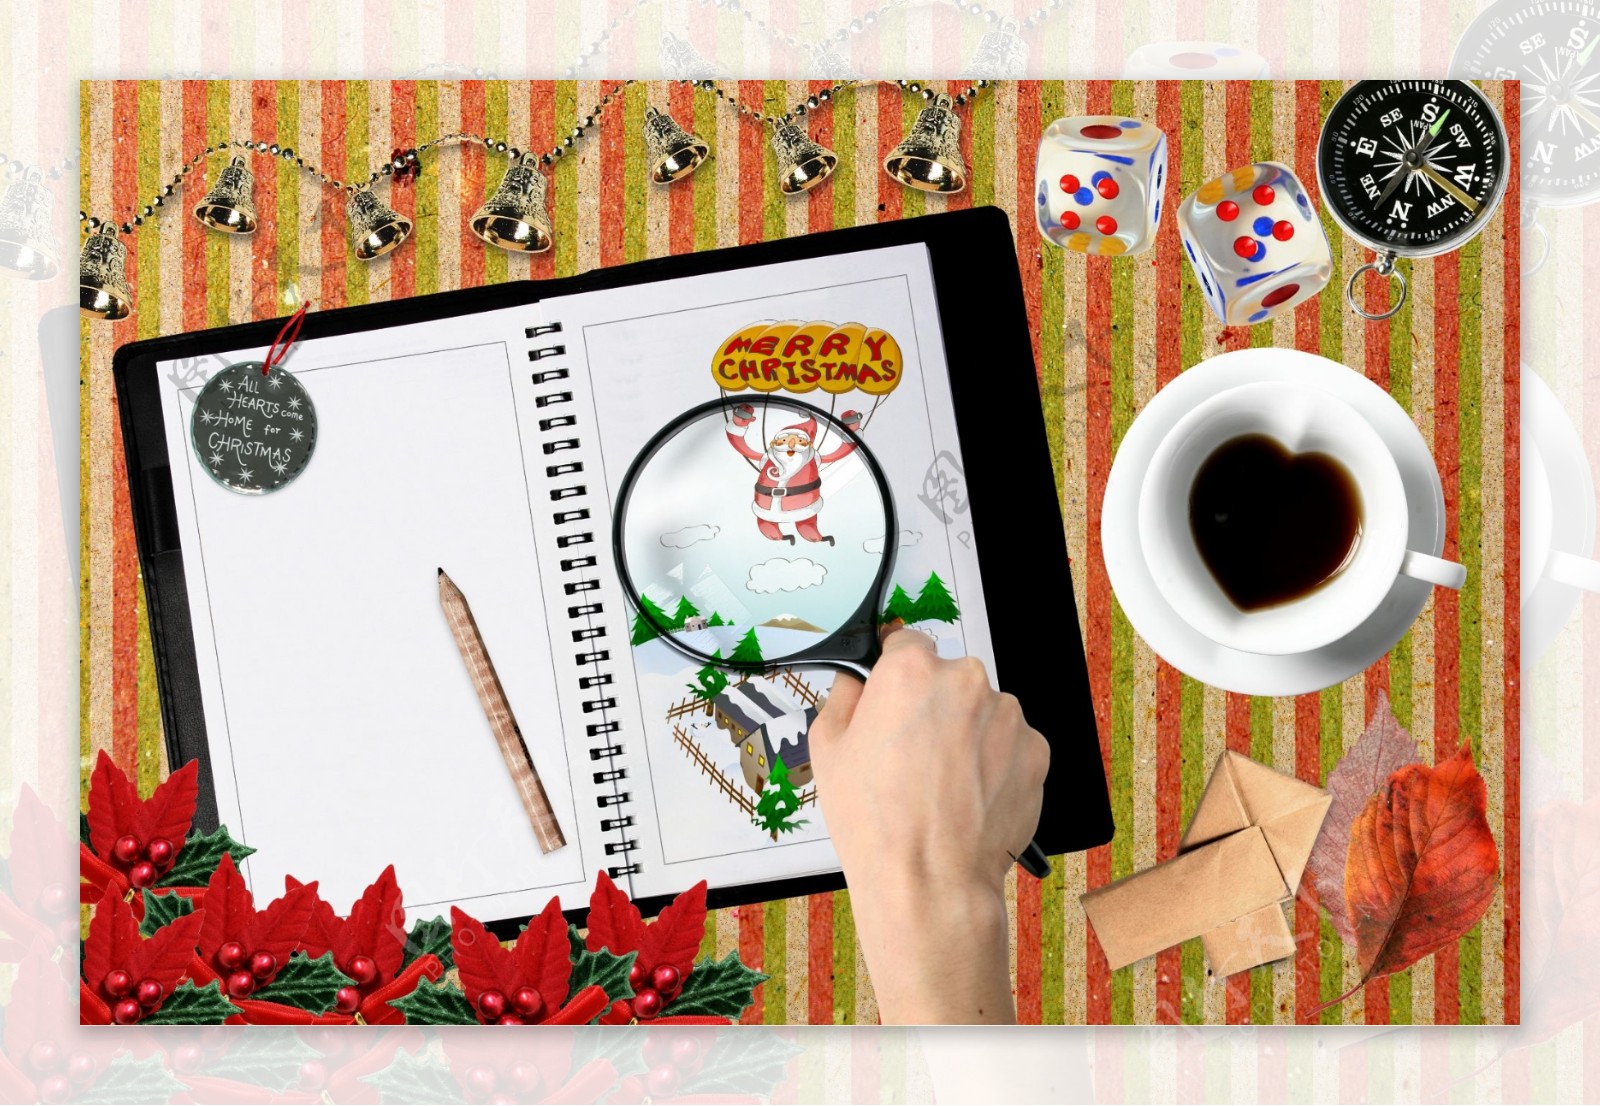 HanMaker韩国设计素材库背景图片卡片礼物祝福圣诞咖啡本子笔放大镜叶子